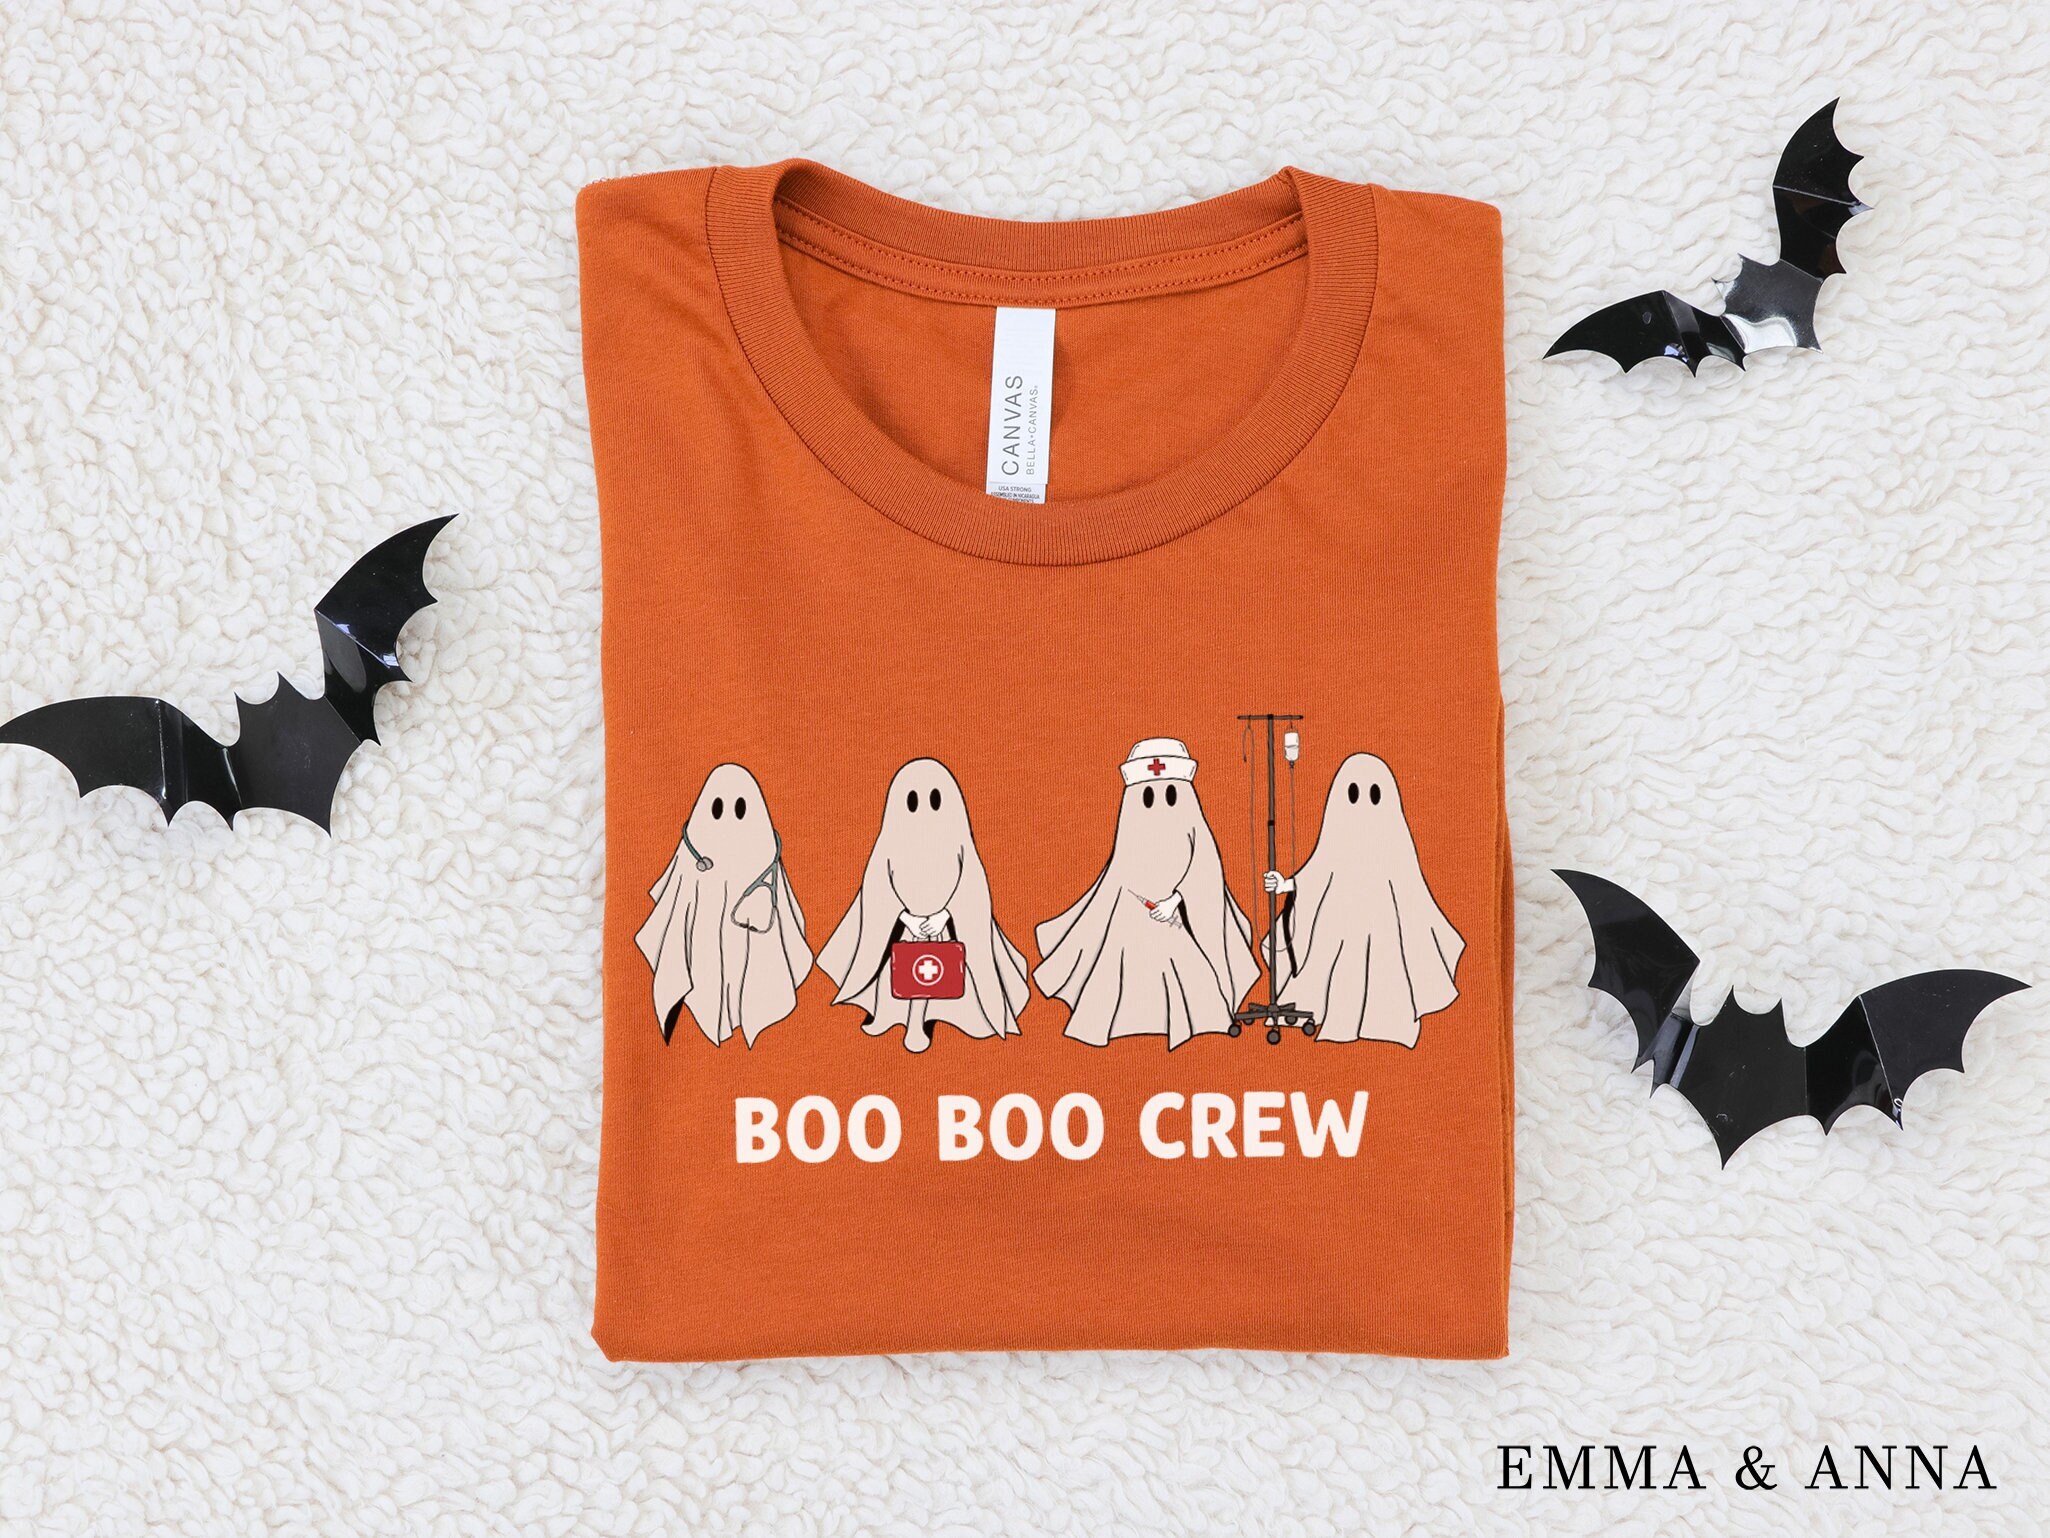 Travel Nurse Boo Crew Funny Halloween Nursing gift' Men's T-Shirt